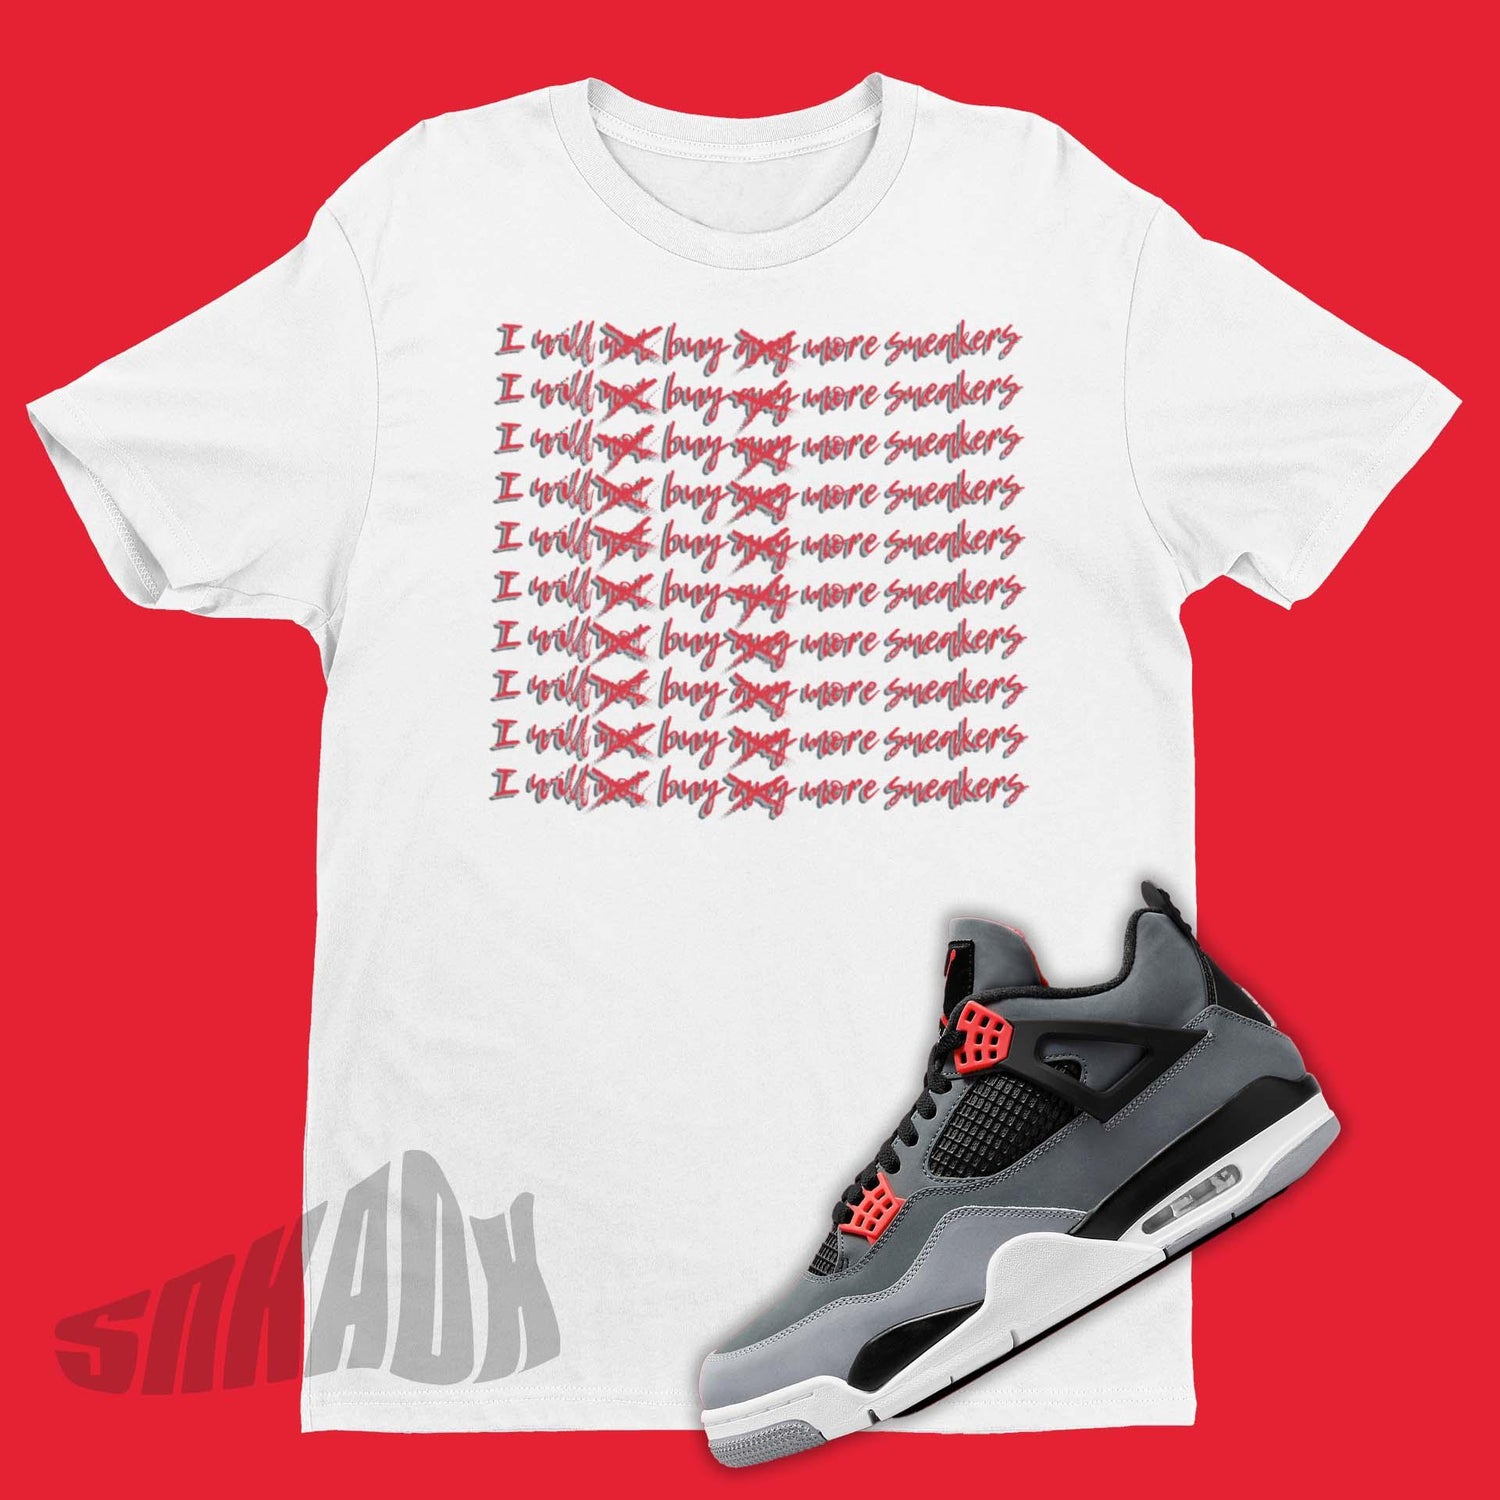 Funny Shirt To Match Air Jordan 4 Infrared 23 - SNKADX